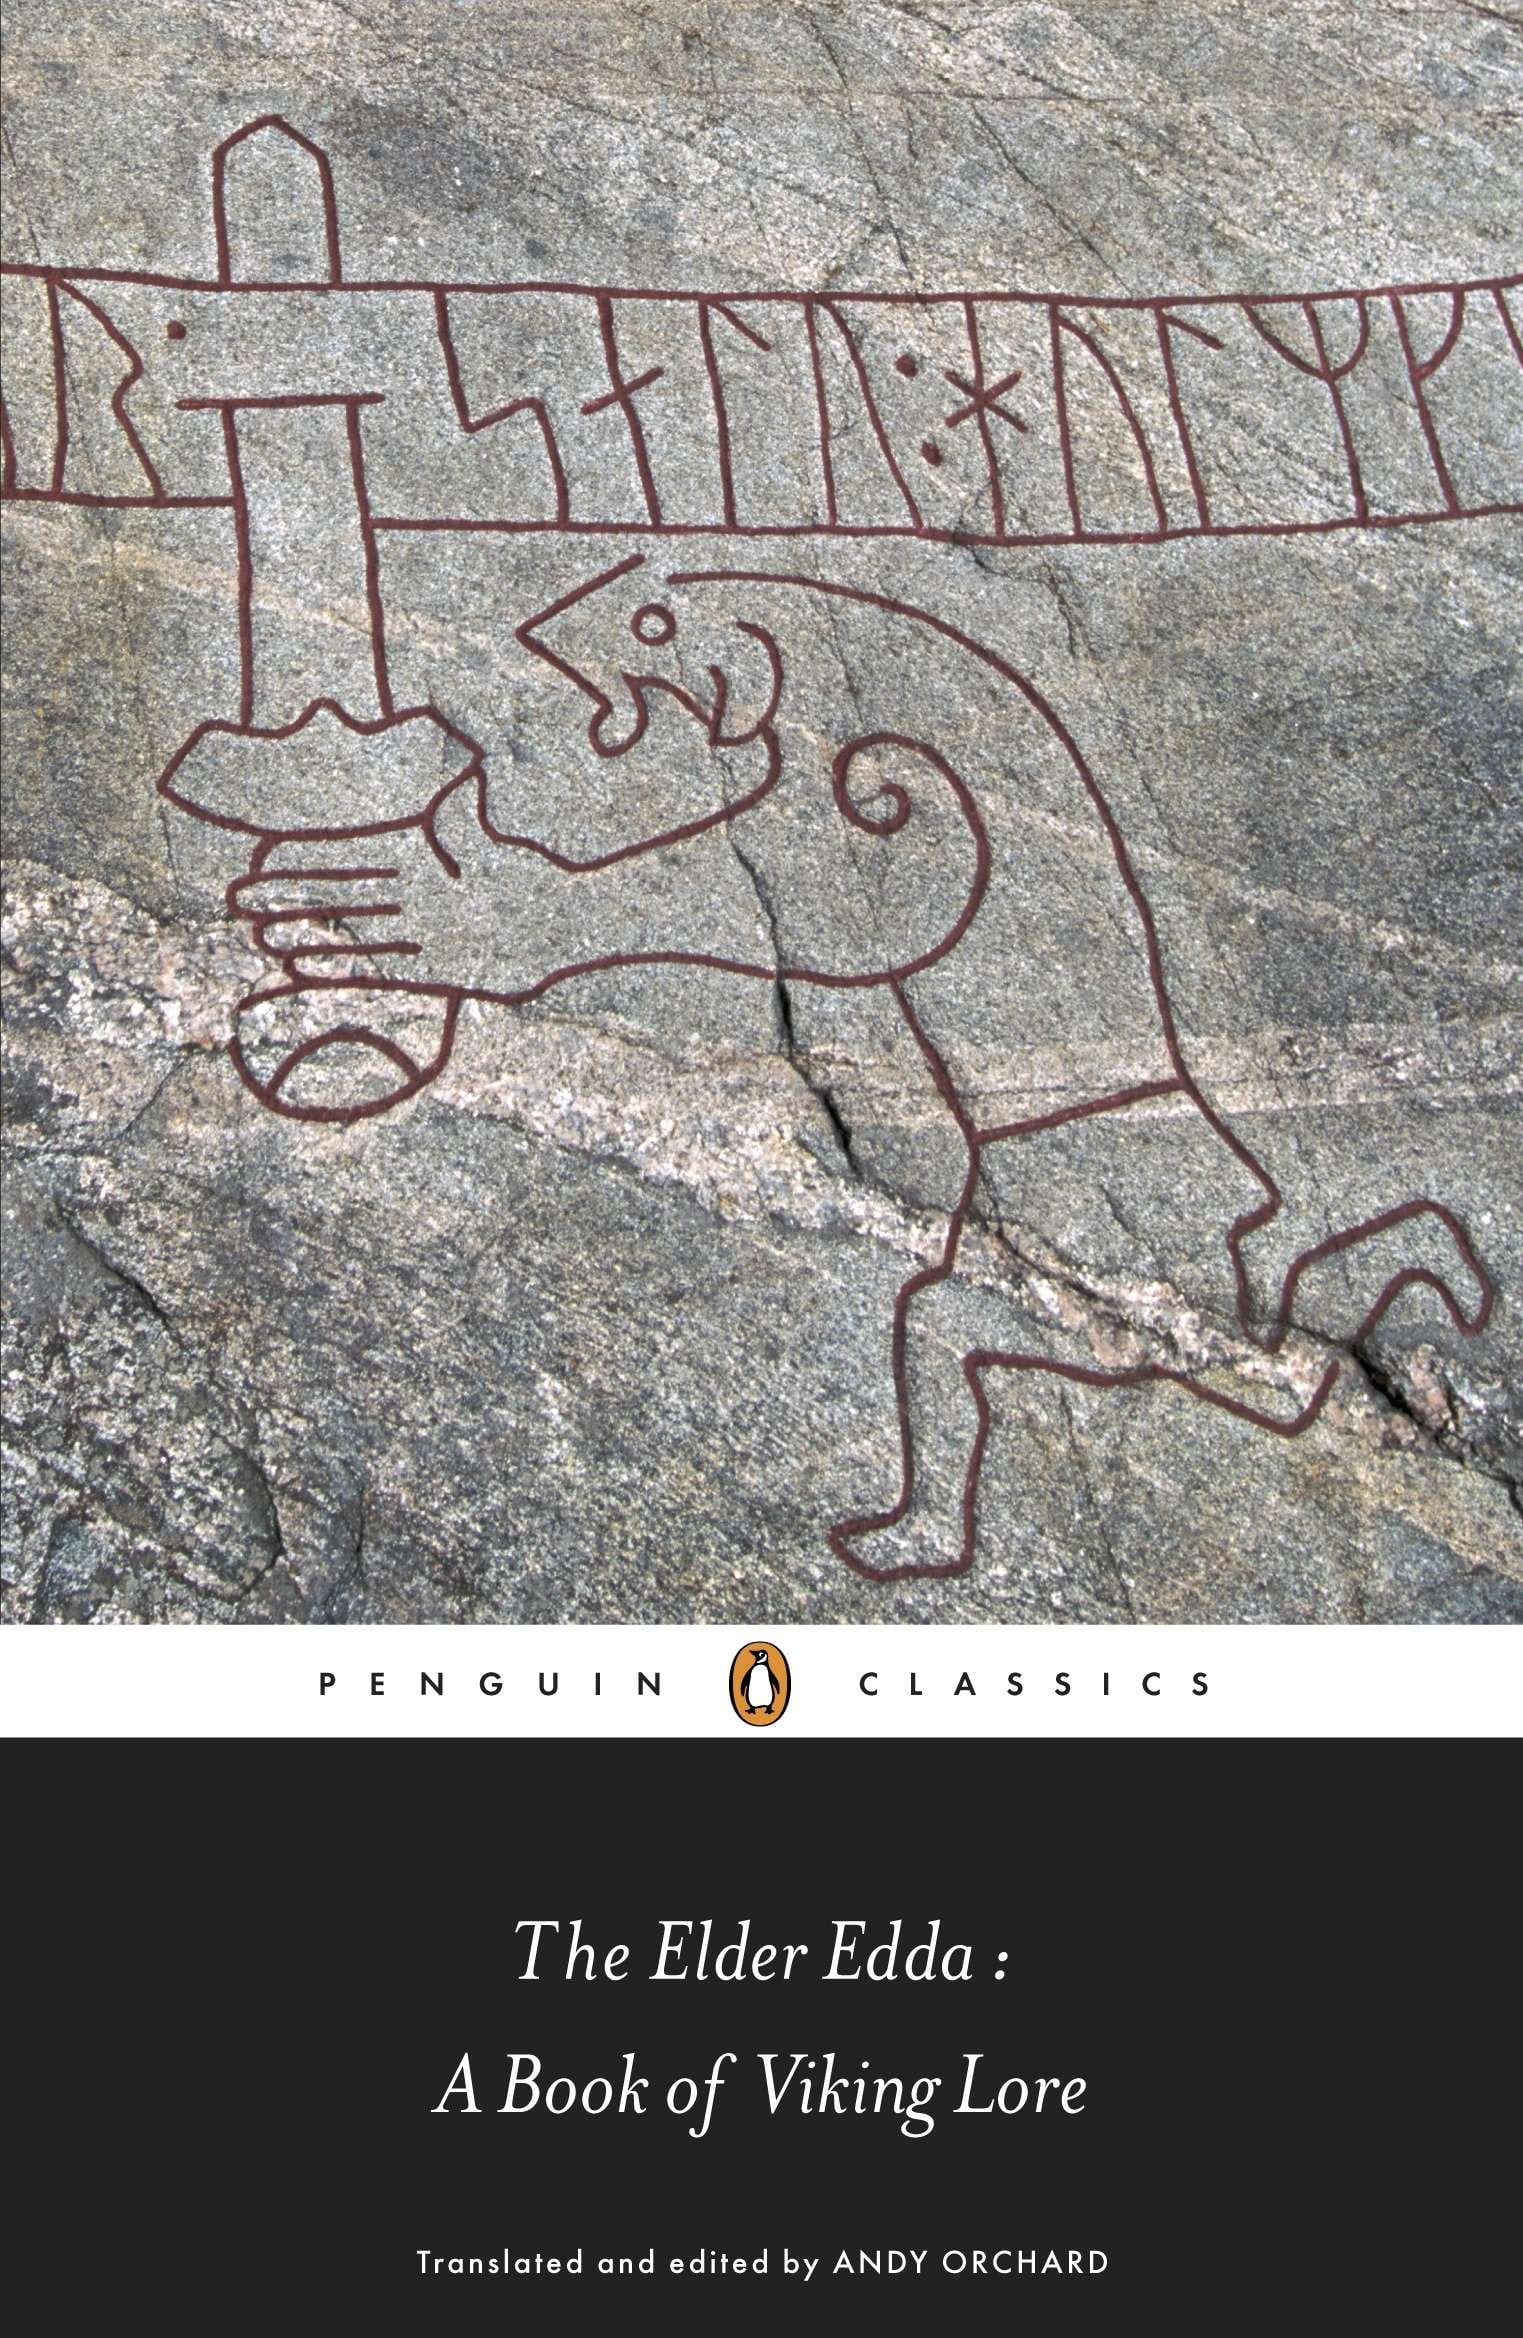 The Elder Edda : A Book of Viking Lore